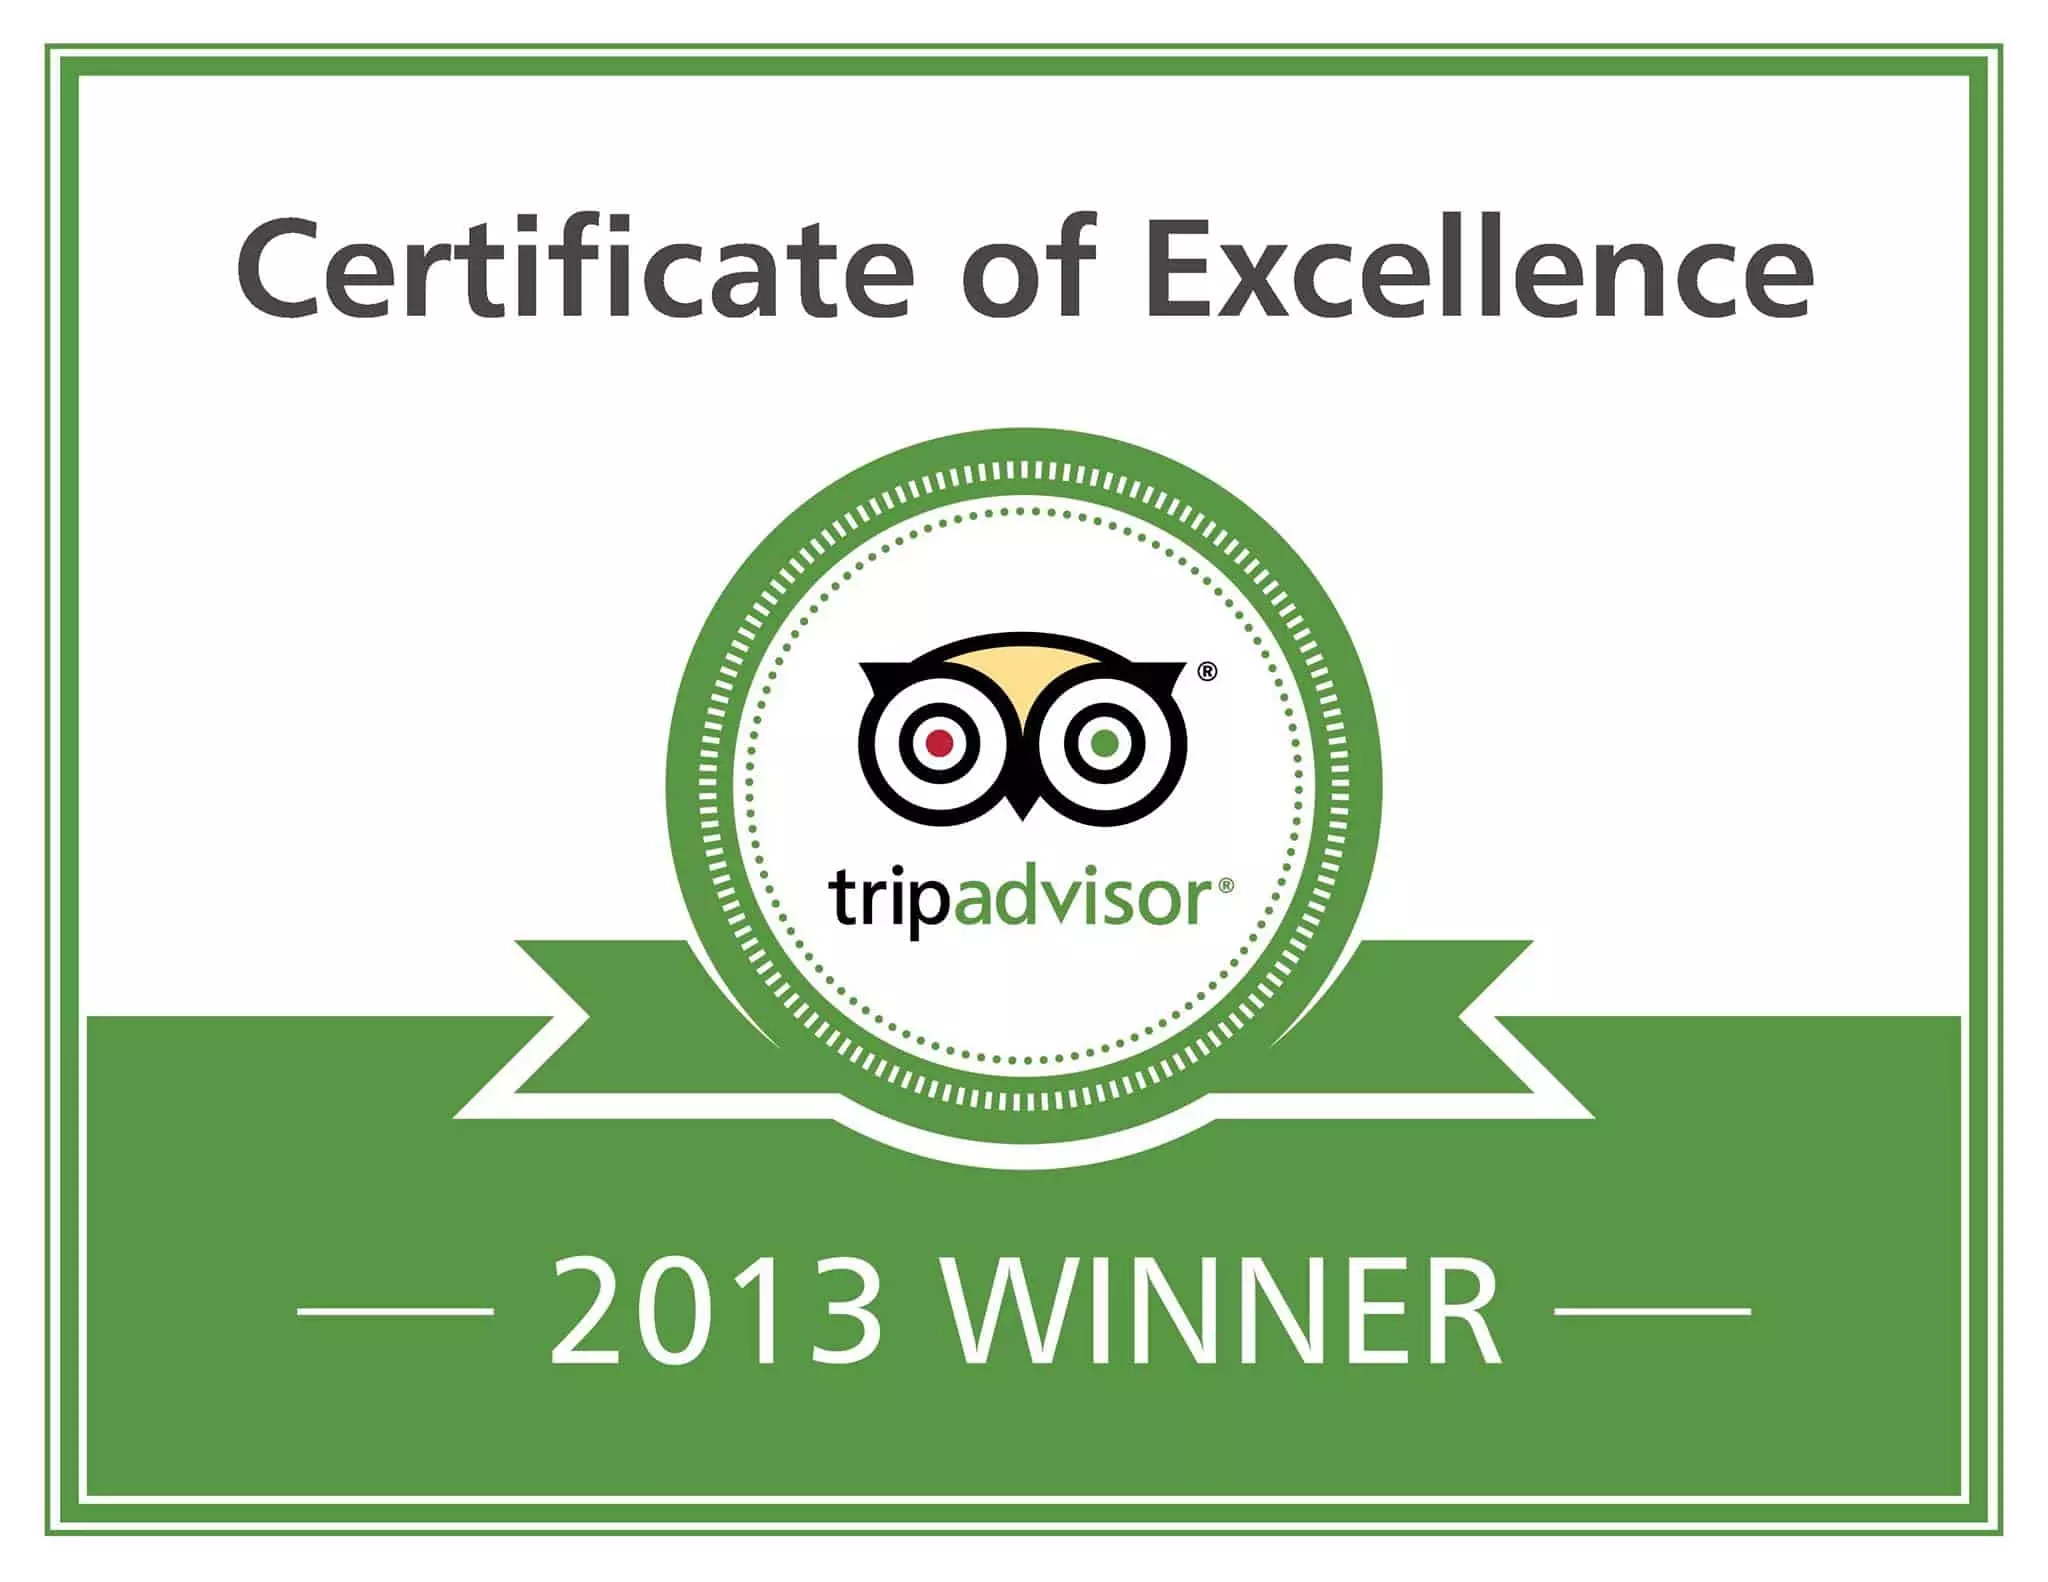 TripAdvisor Certificate of Excellence for 2013